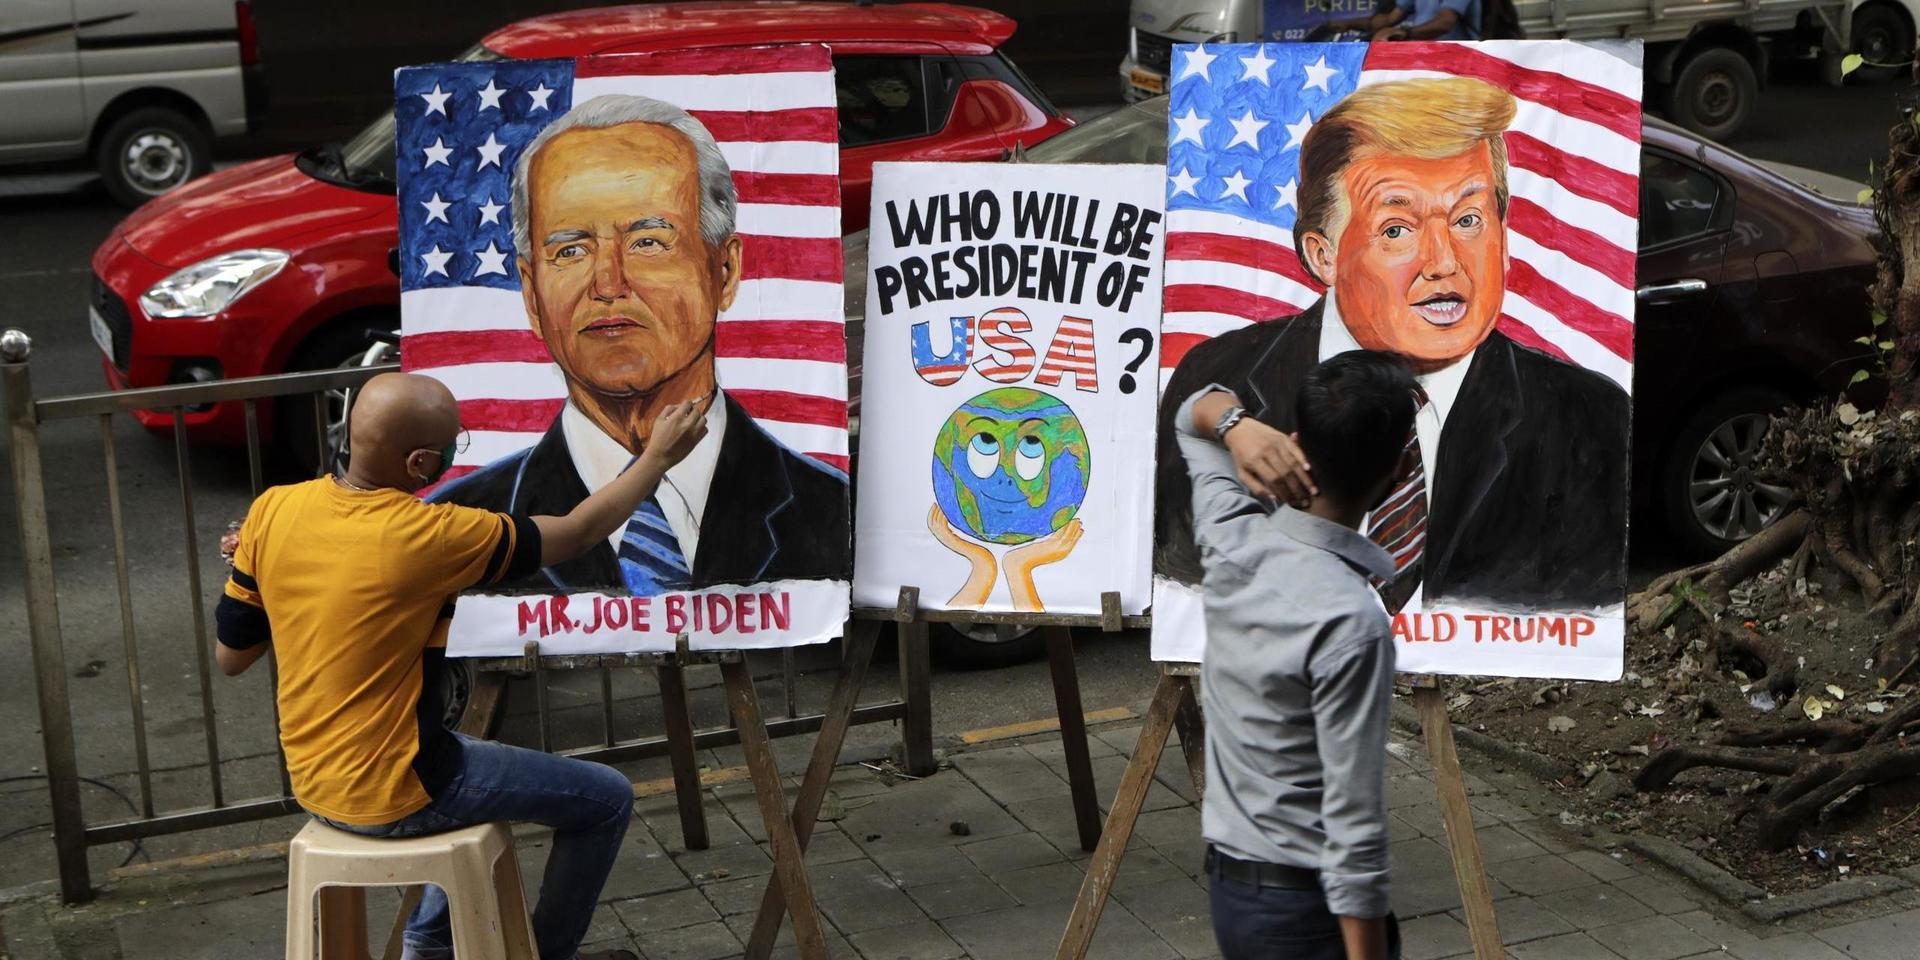 Indian art teacher Sagar Kambli makes paintings of President Donald Trump and Democratic rival Joe Biden on a pavement outside his art school remaining closed due to the COVID-19 pandemic in Mumbai, India, Thursday, Oct. 29, 2020. (AP Photo/Rajanish Kakade)  RKD101